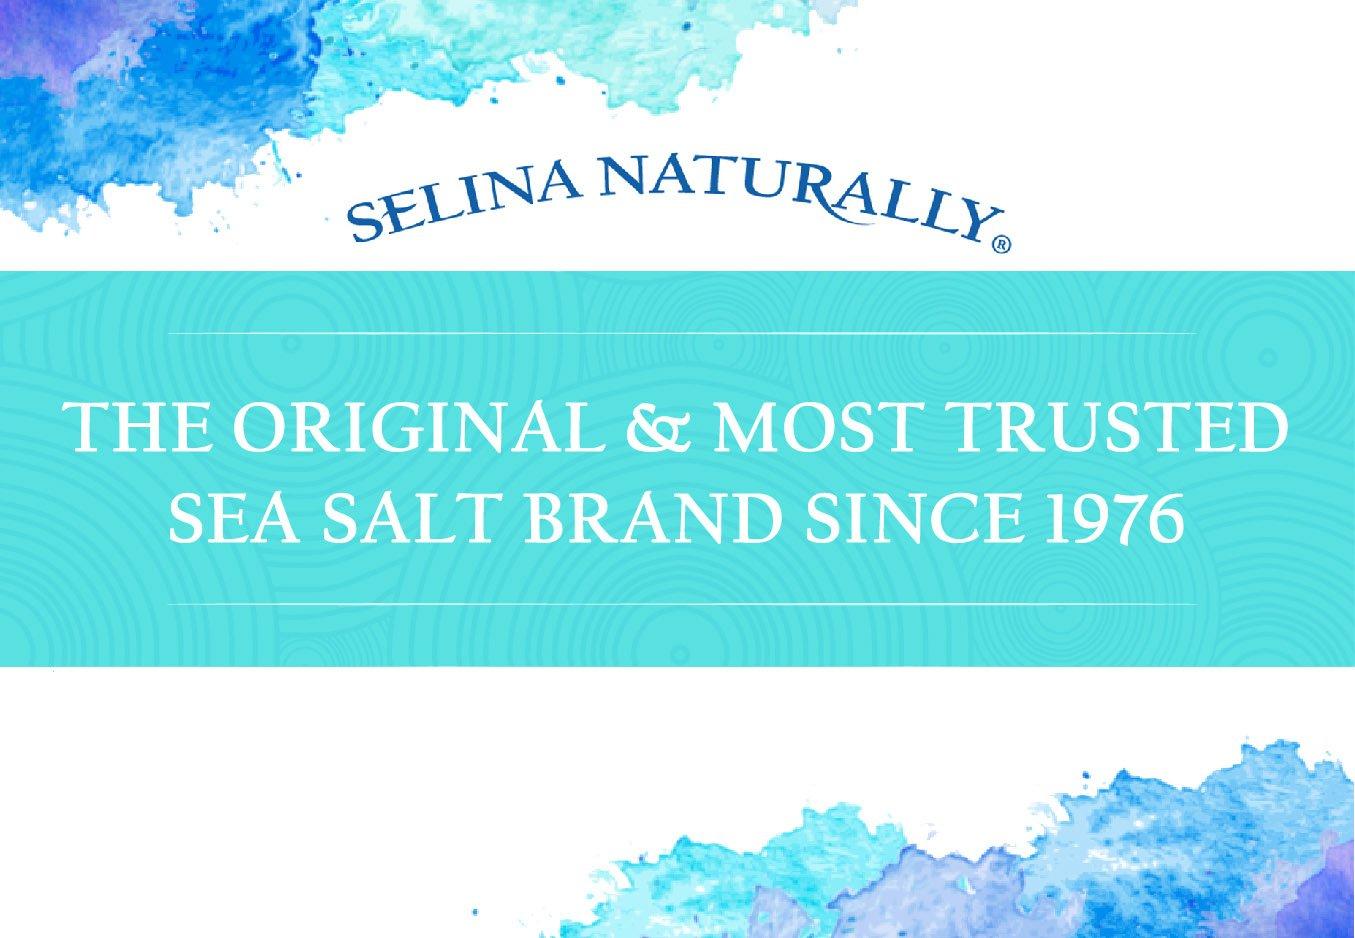 Selina Naturally - Light Grey Celtic ® (5 lb)